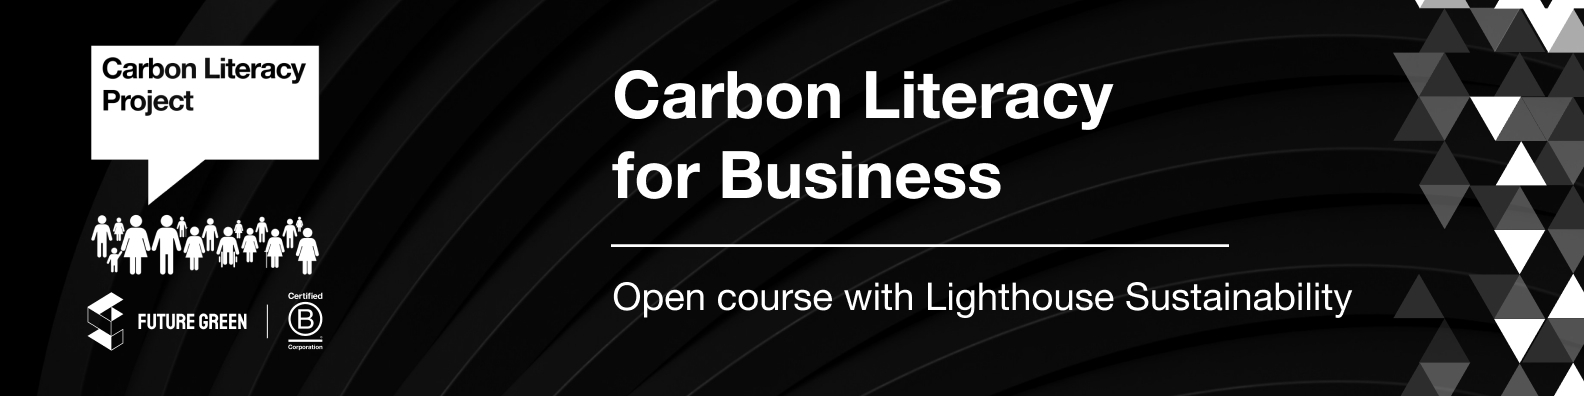 Carbon literacy course